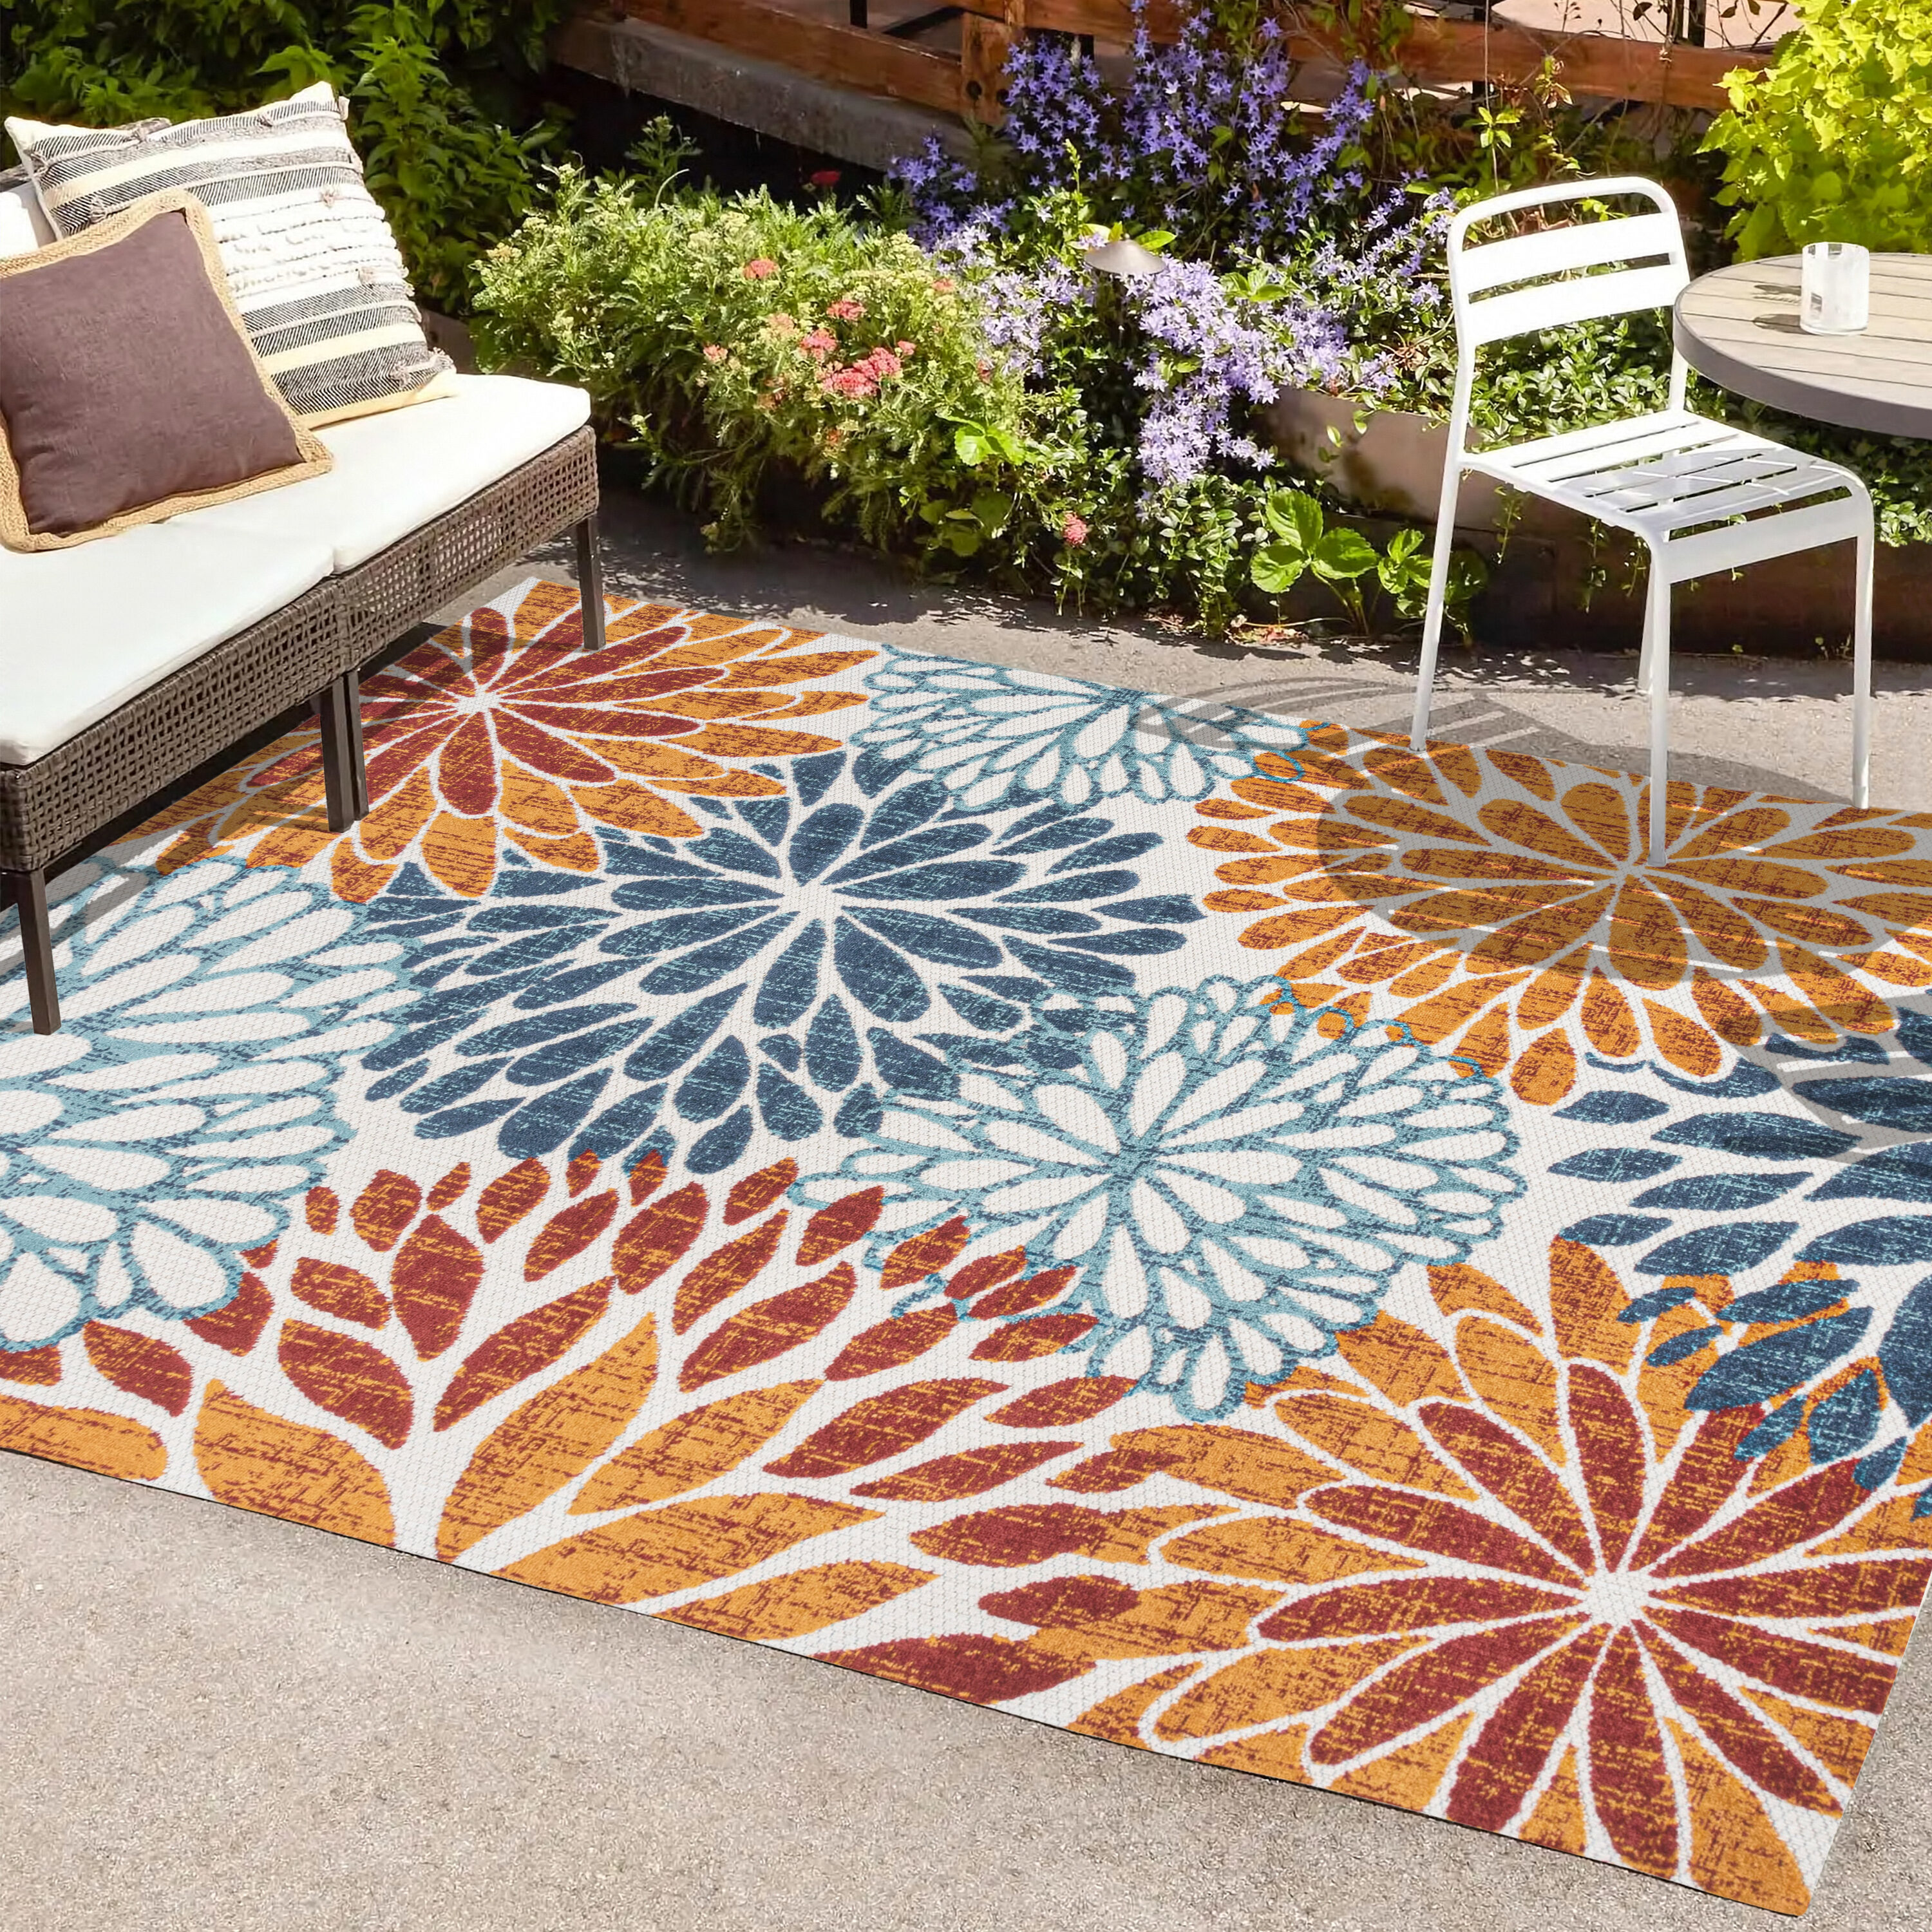 J&V Textiles 18 in. x 30 in. Spring Bloom Kitchen Cushion Floor Mat